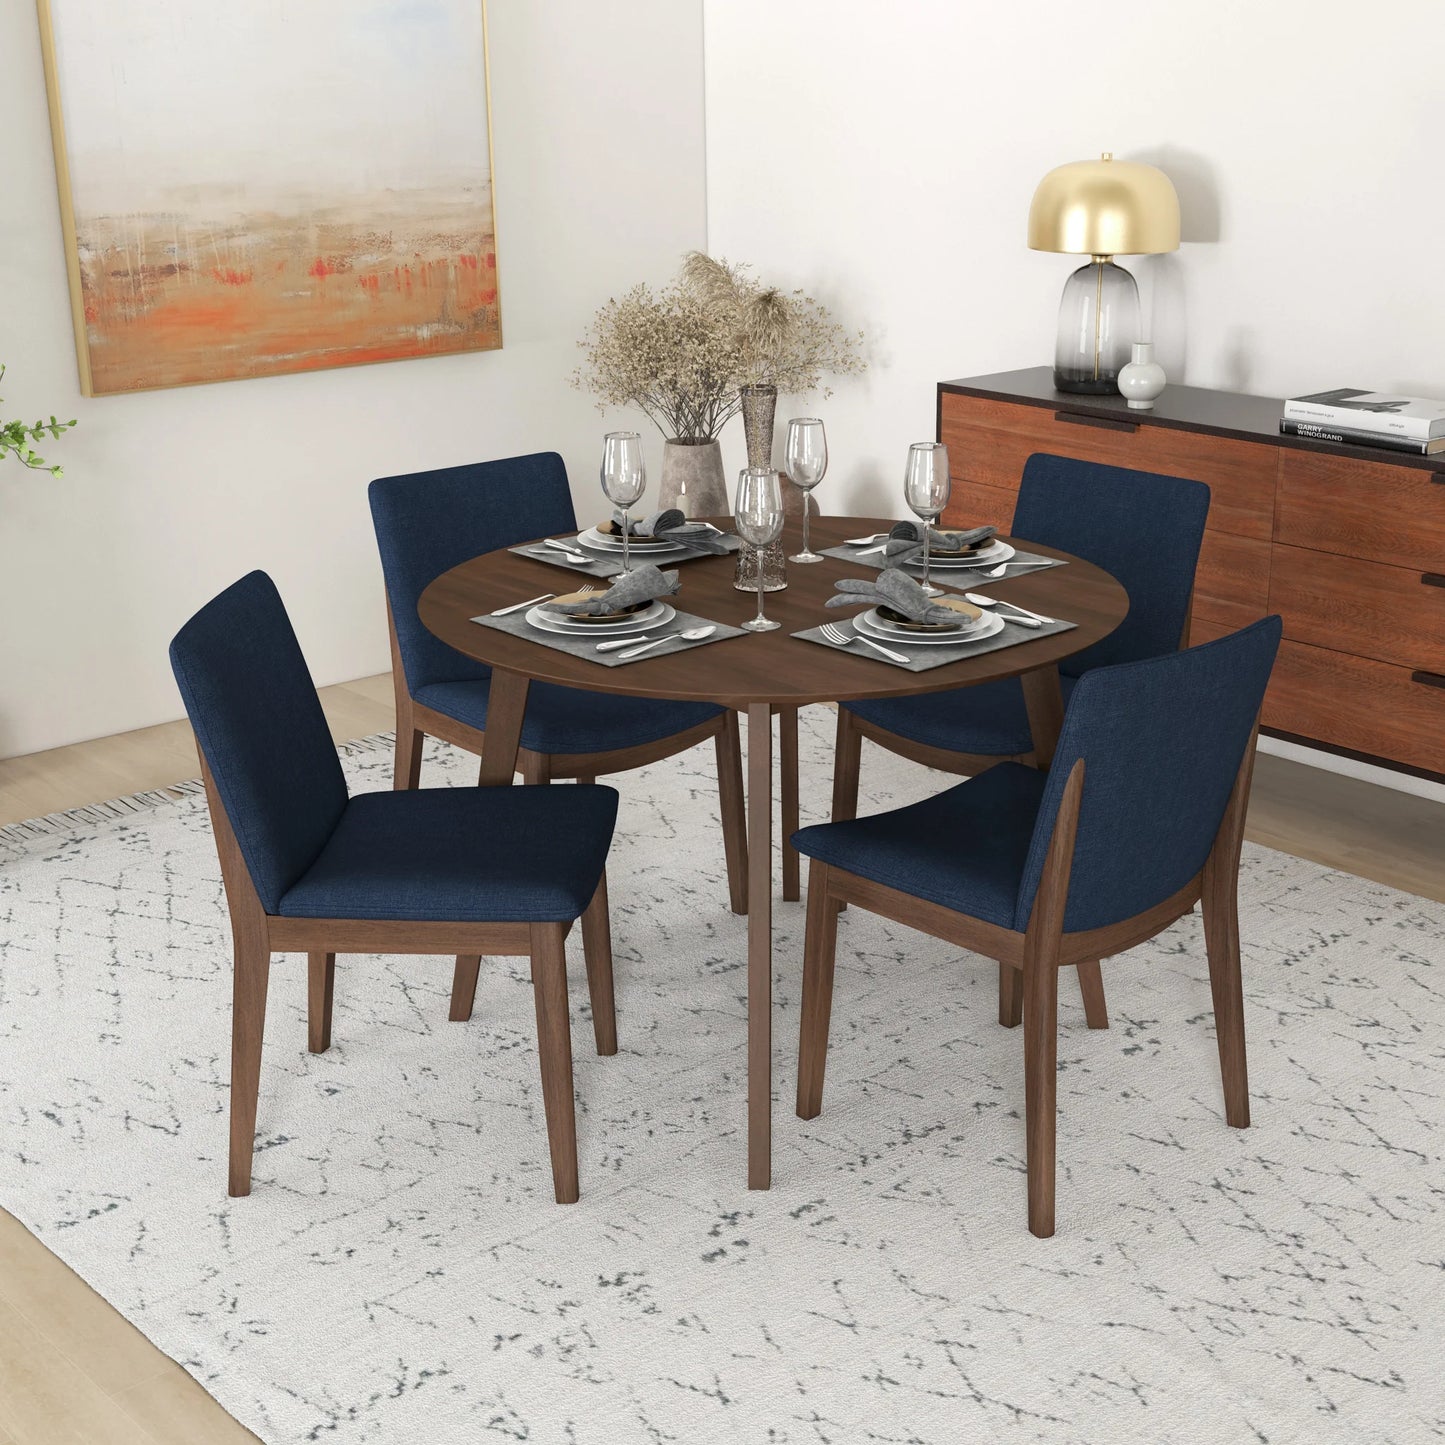 Dining Set, Aliana Walnut Round Table with 4 Virginia Blue Chairs